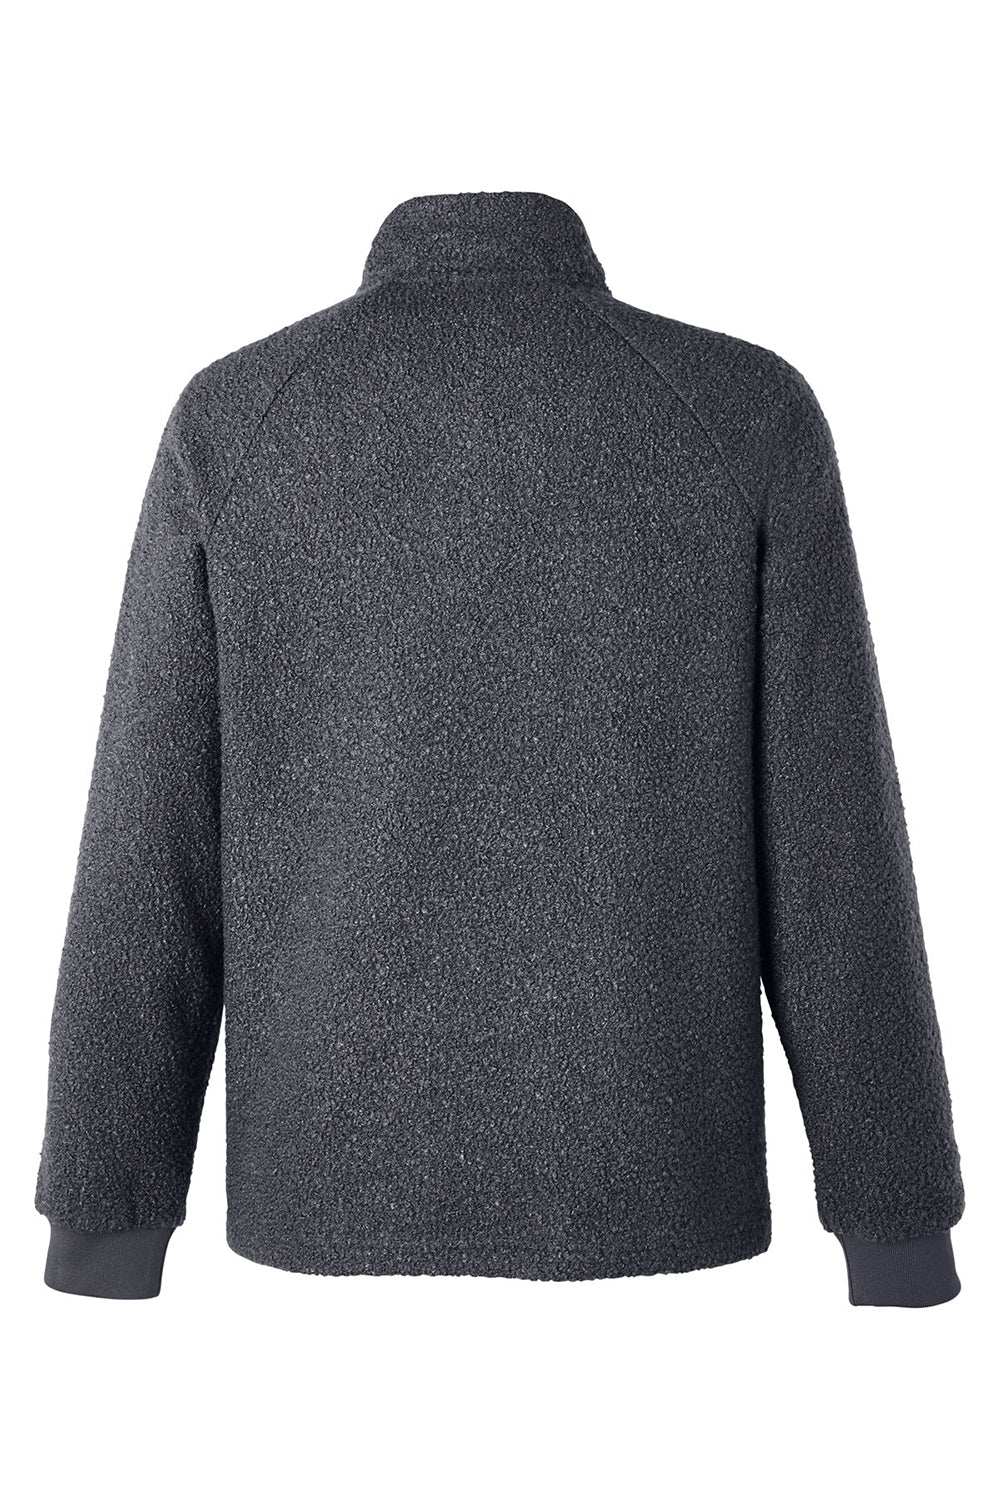 North End NE713 Mens Aura Sweater Fleece 1/4 Zip Sweatshirt Carbon Grey Flat Back